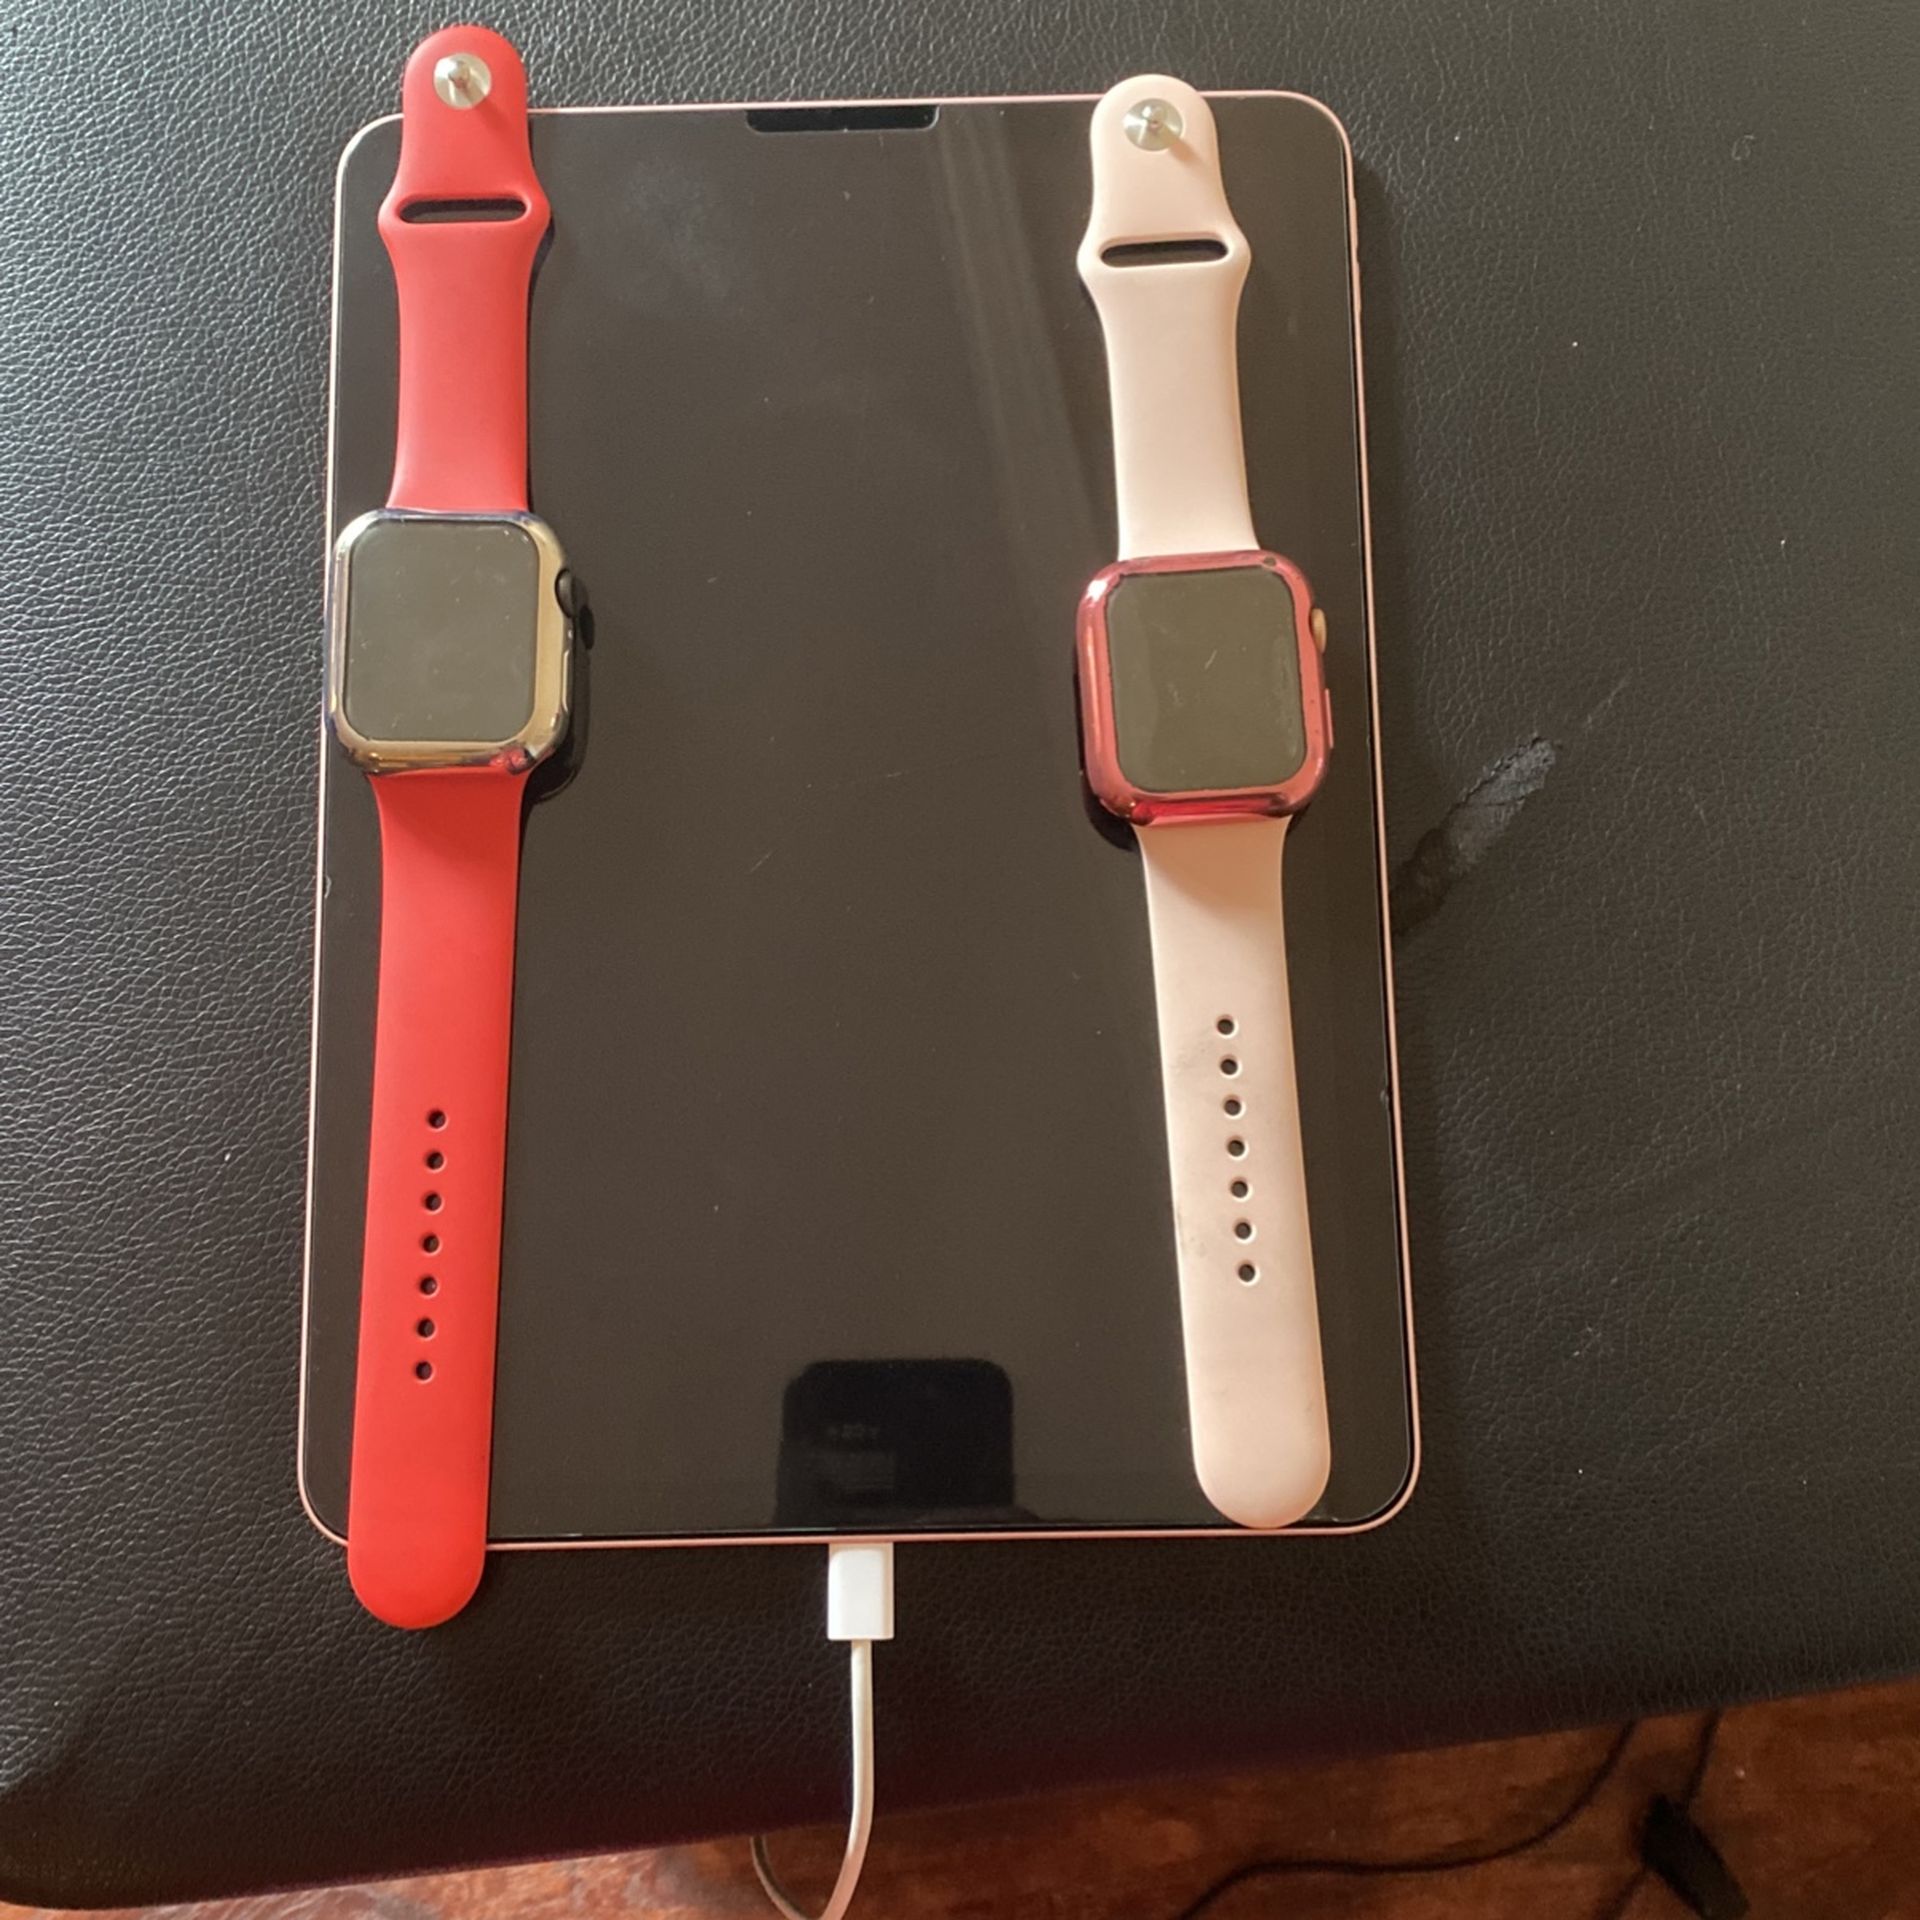 Apple Bundle Ipad and Watches